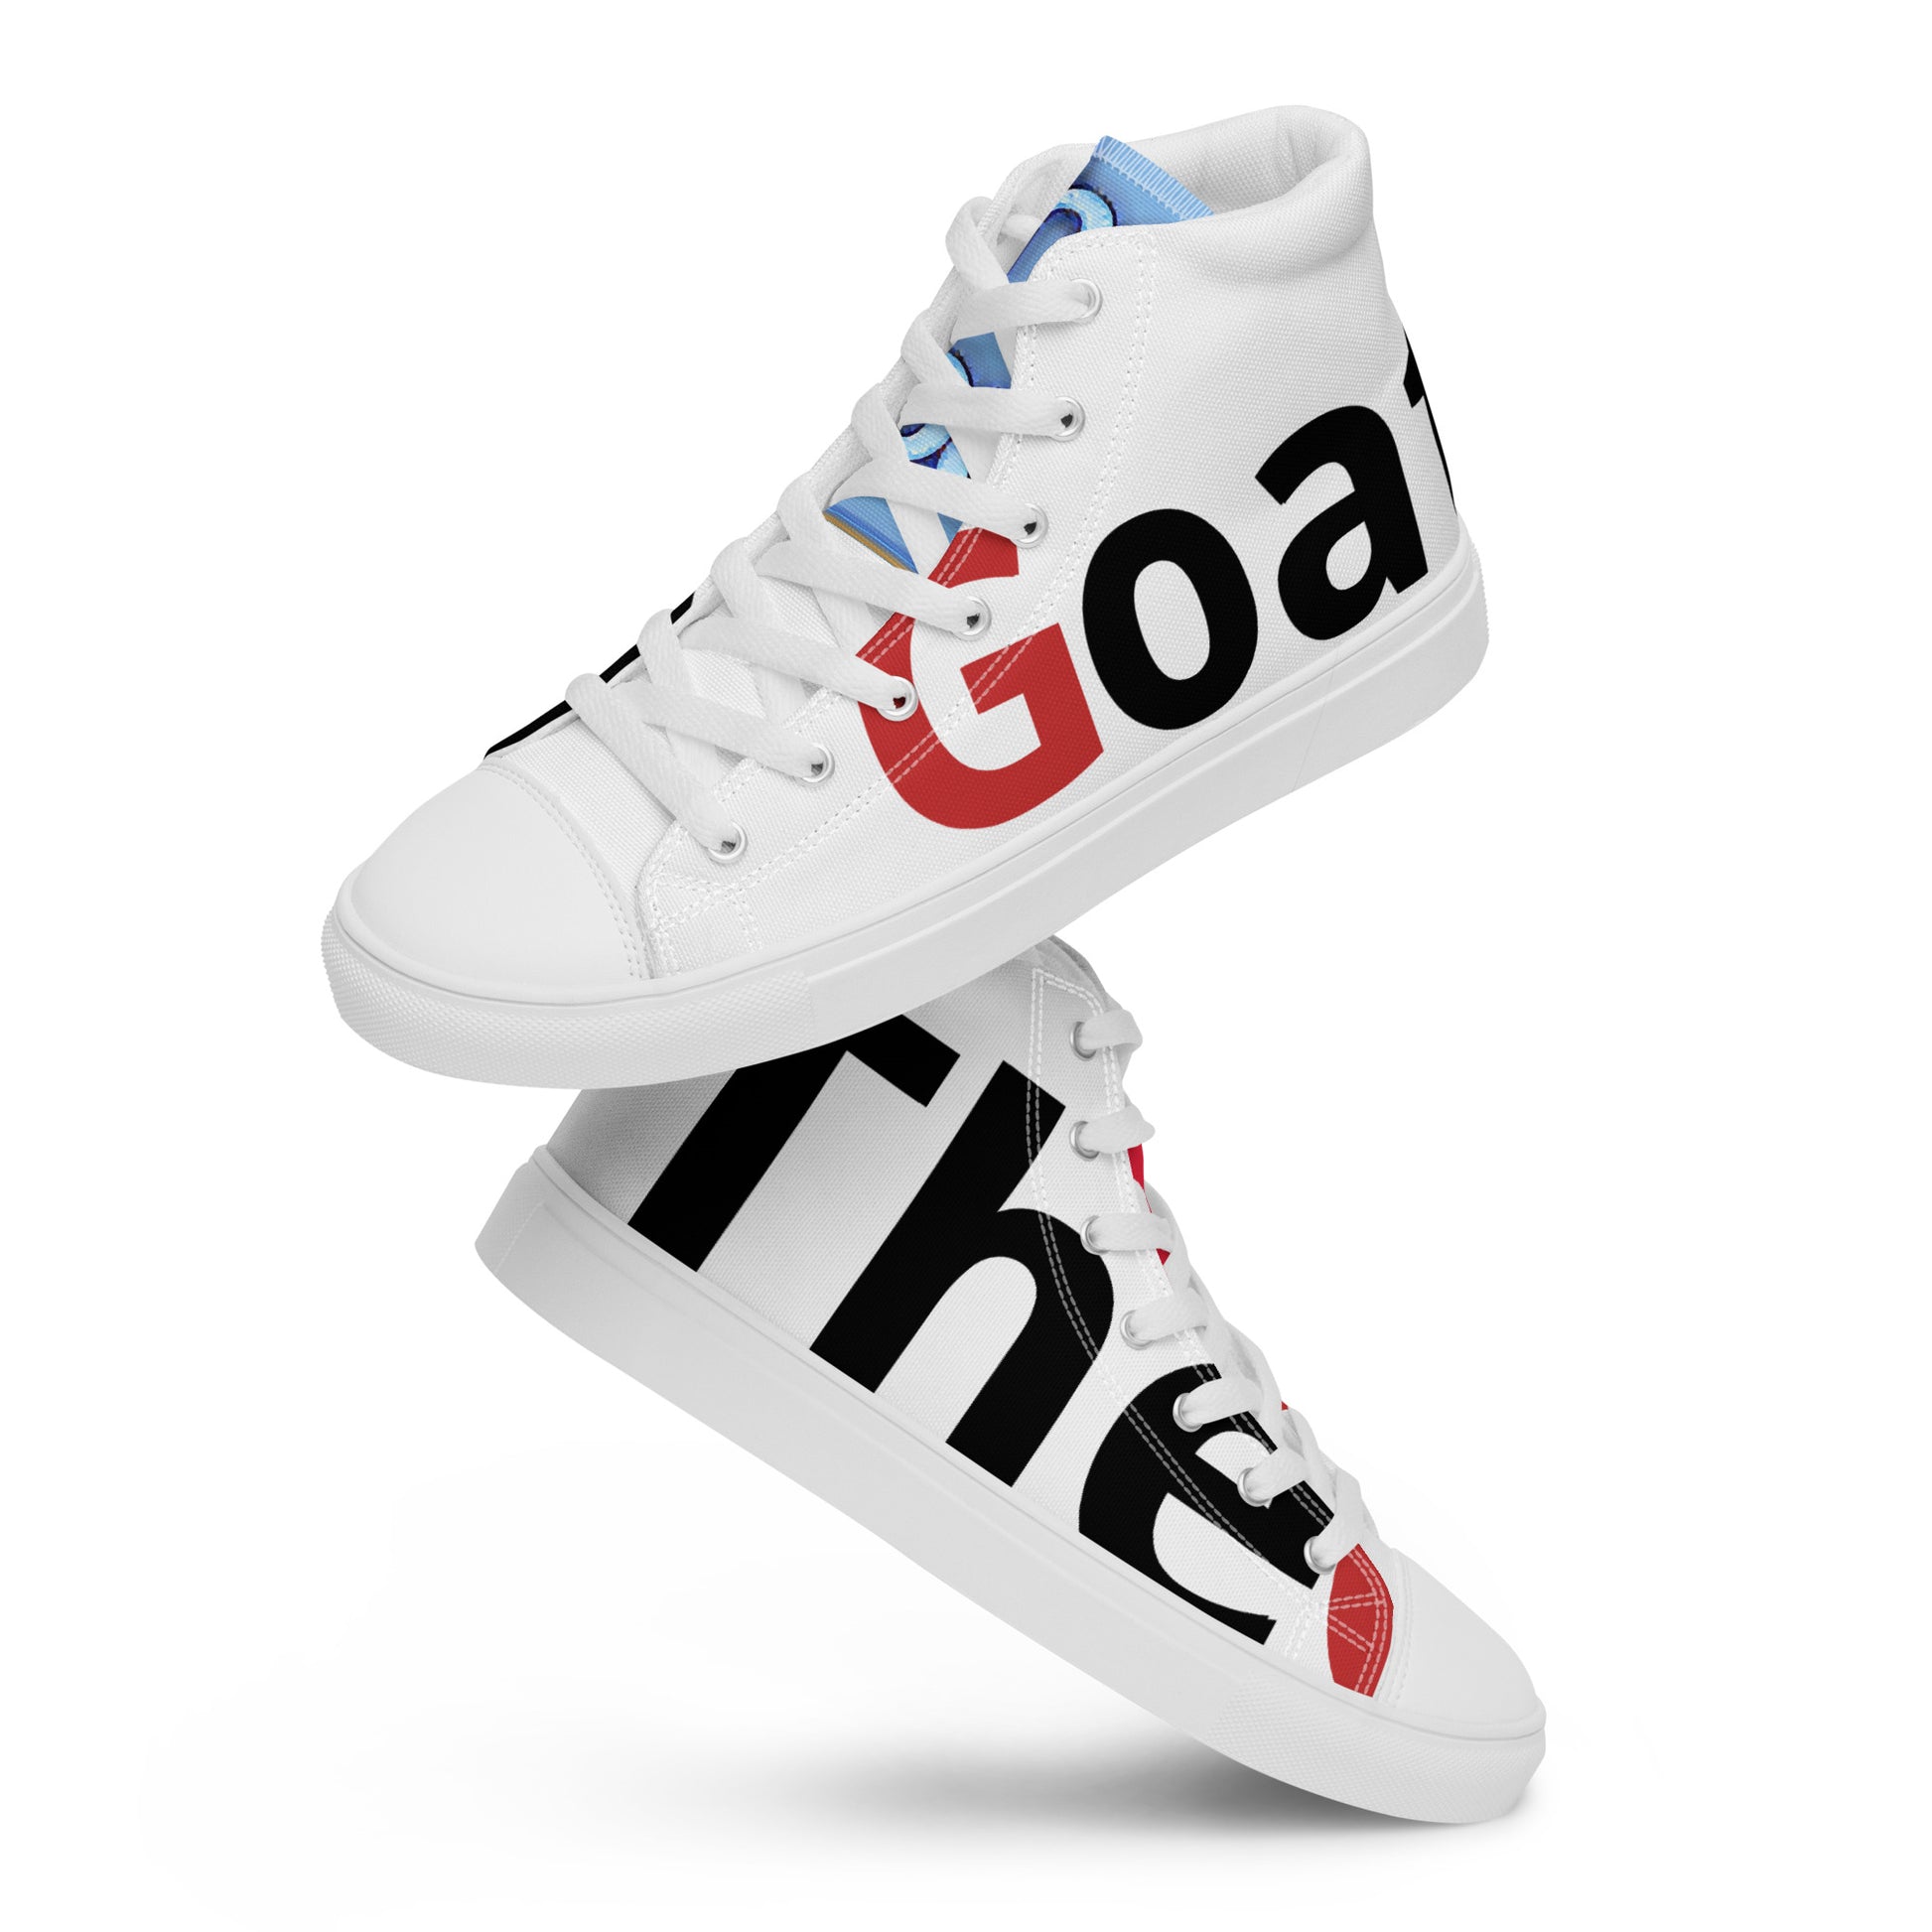 Zapatillas de lona de Design TheGoat-Design TheGoat Canvas Sneakers TheGoatZhomax